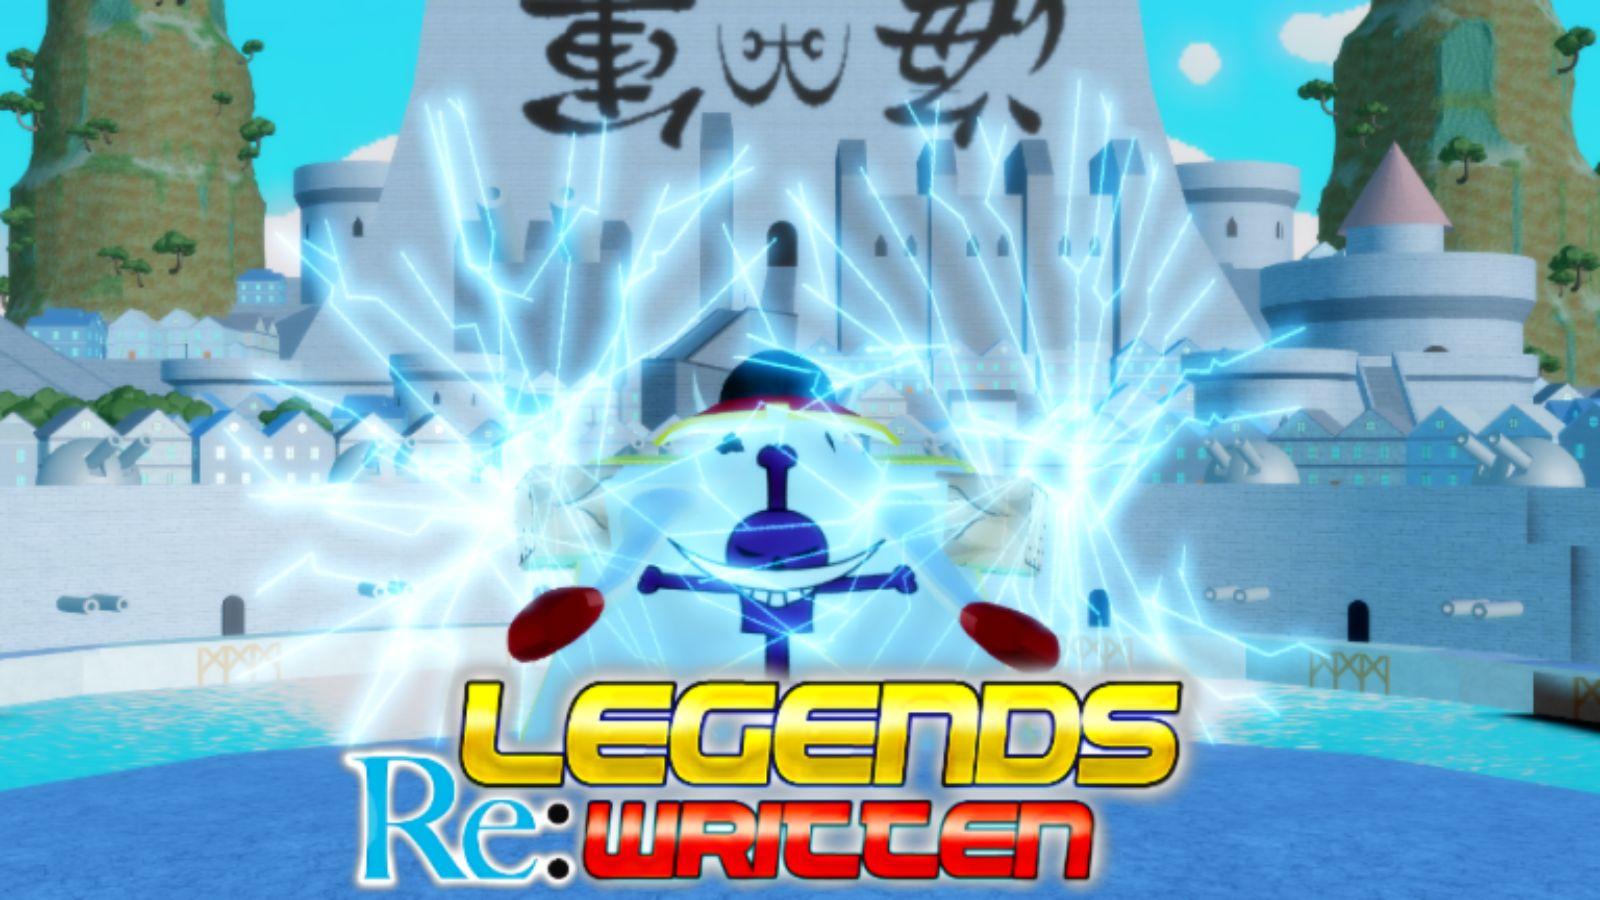 Legends ReWritten cover art with blue power up